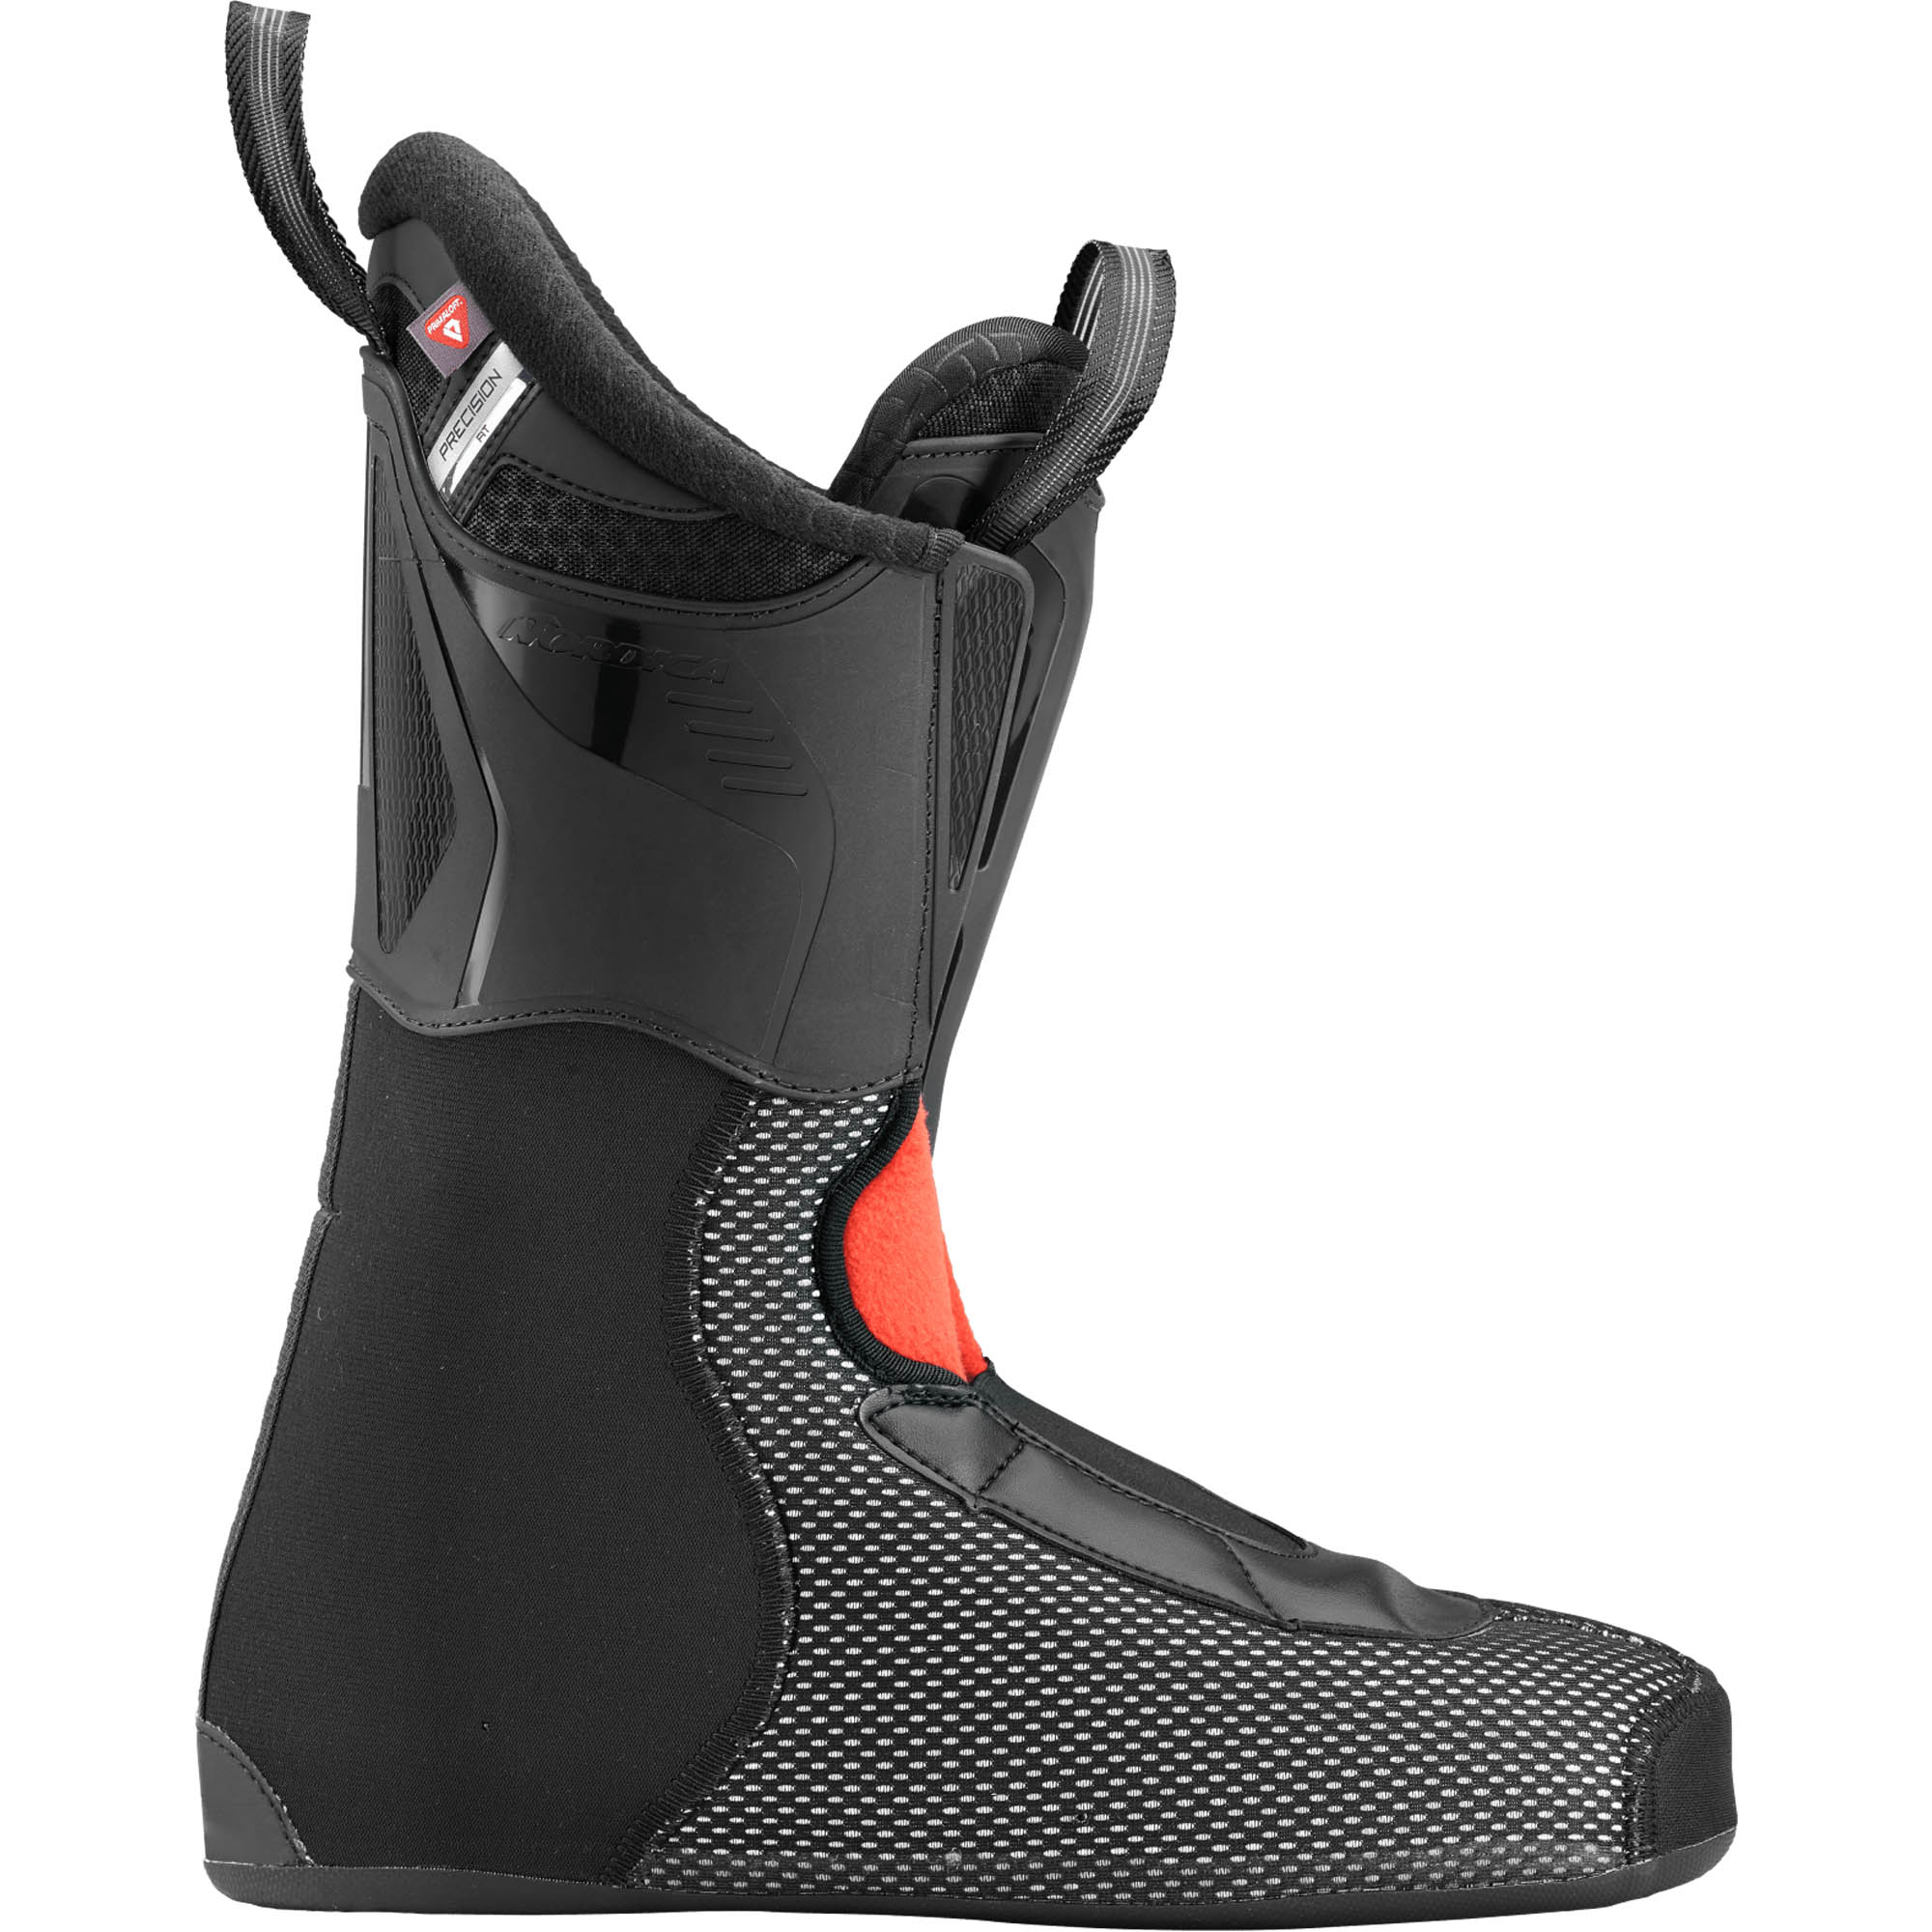 Nordica Sportmachine 3 100 GW GripWalk Ski Boots